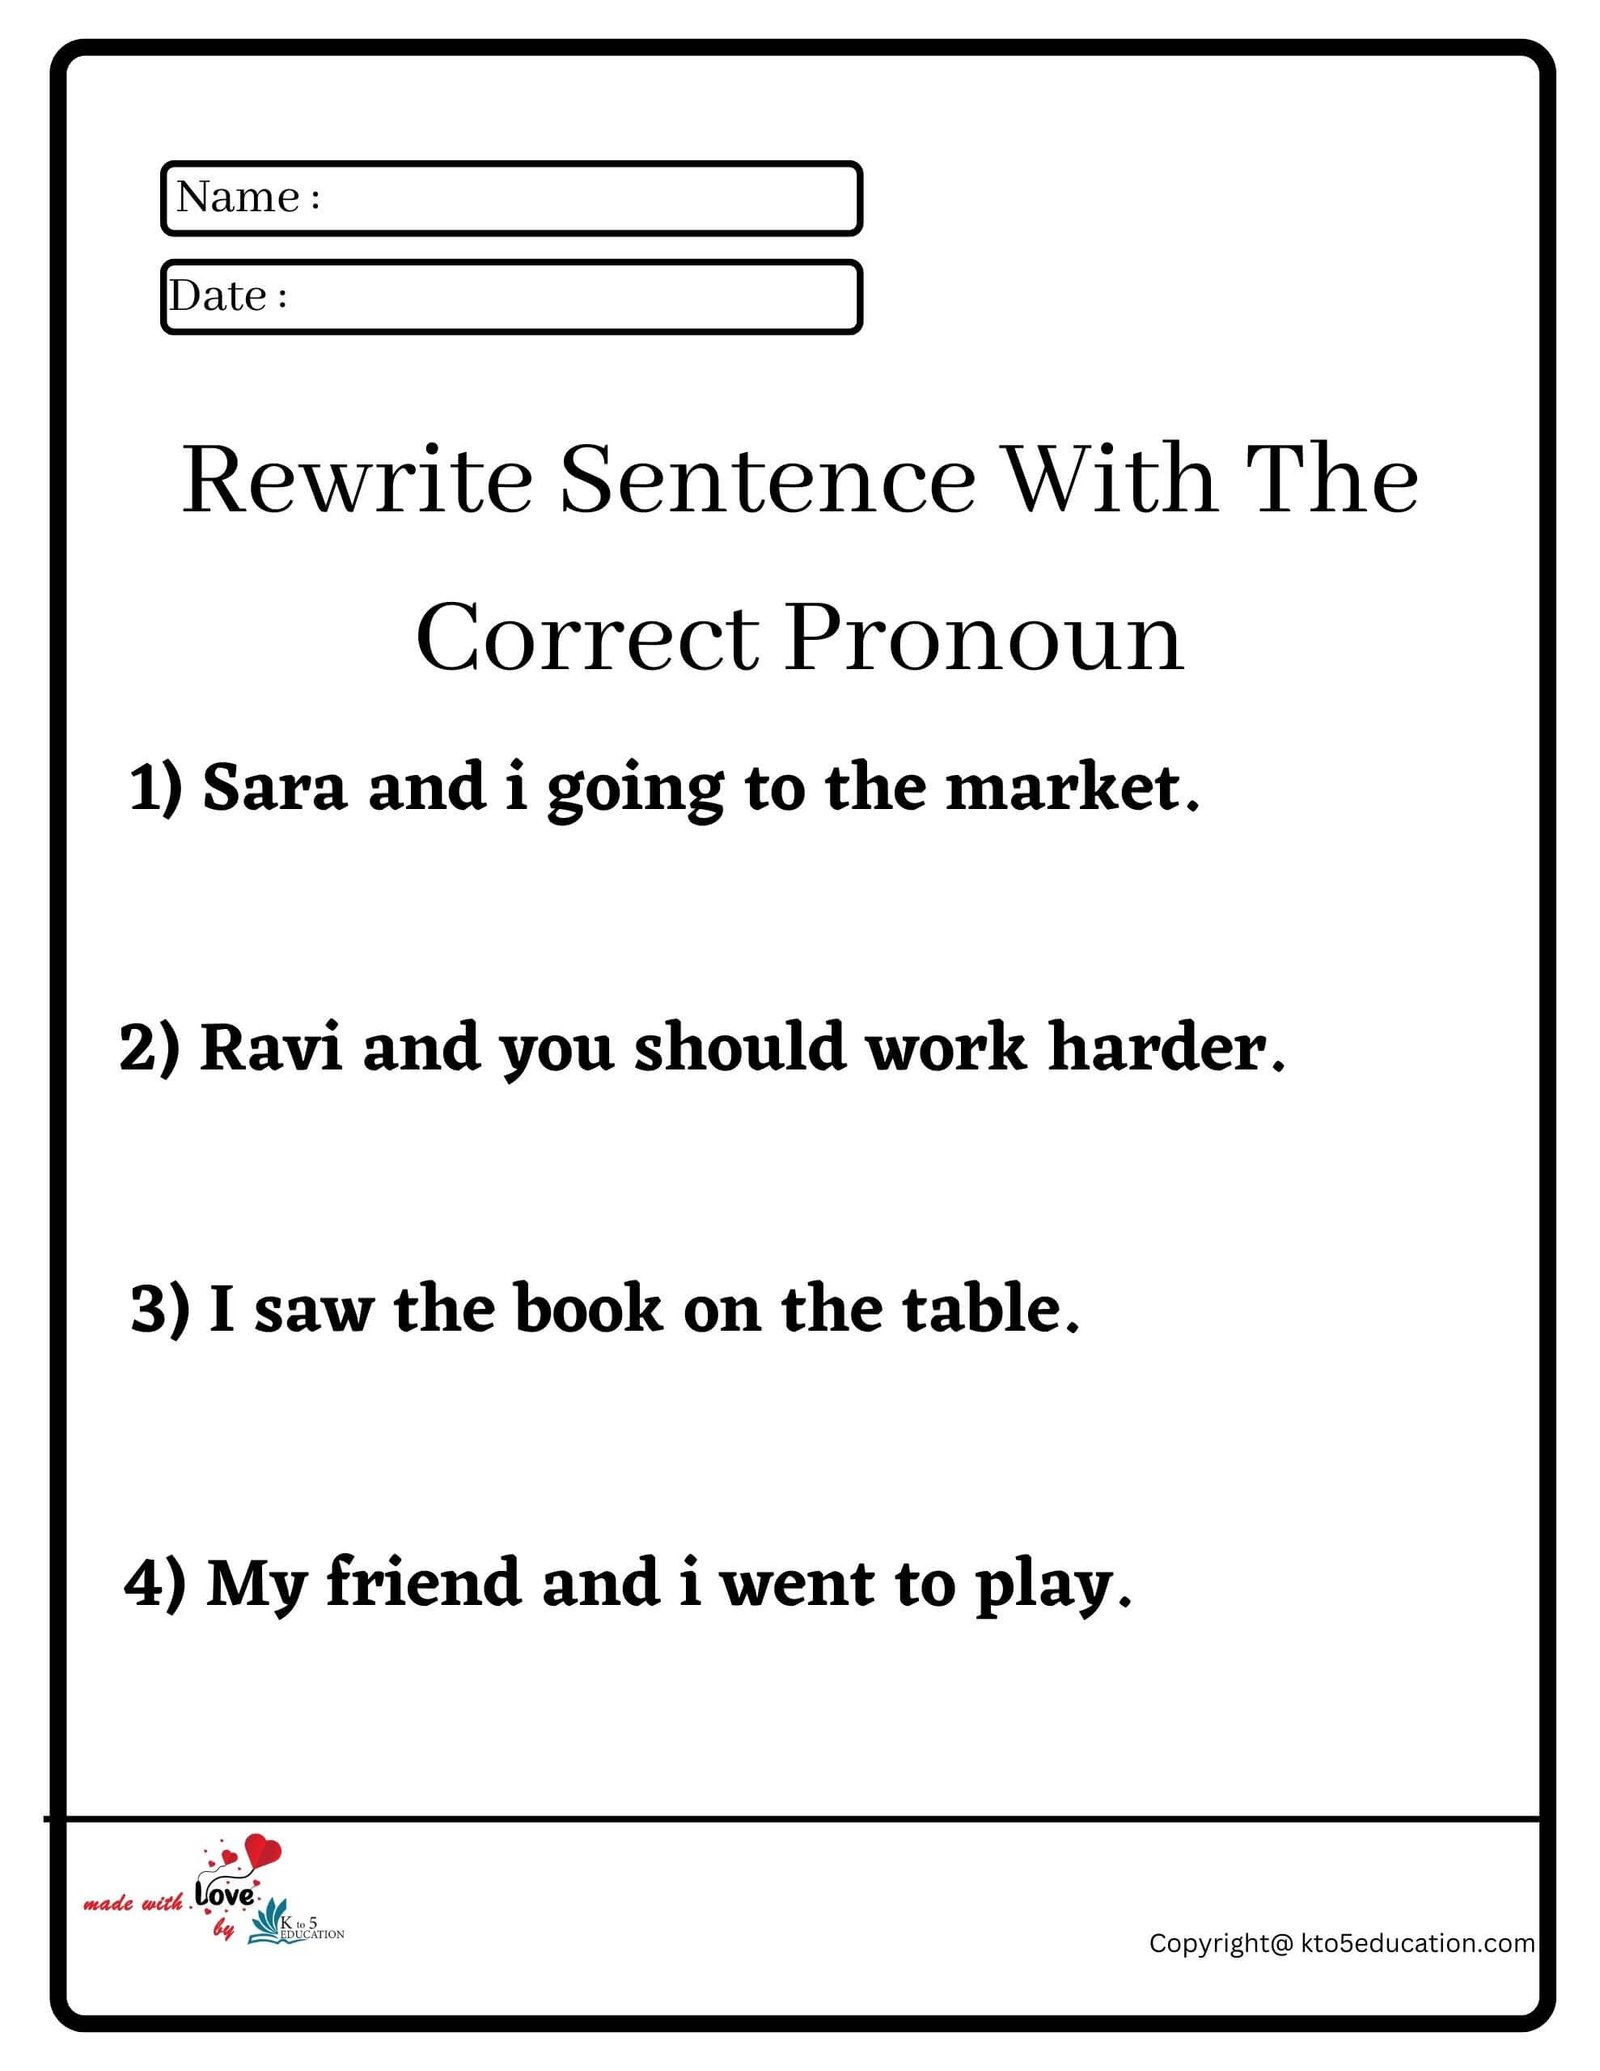 rewrite-sentence-with-the-correct-pronoun-worksheet